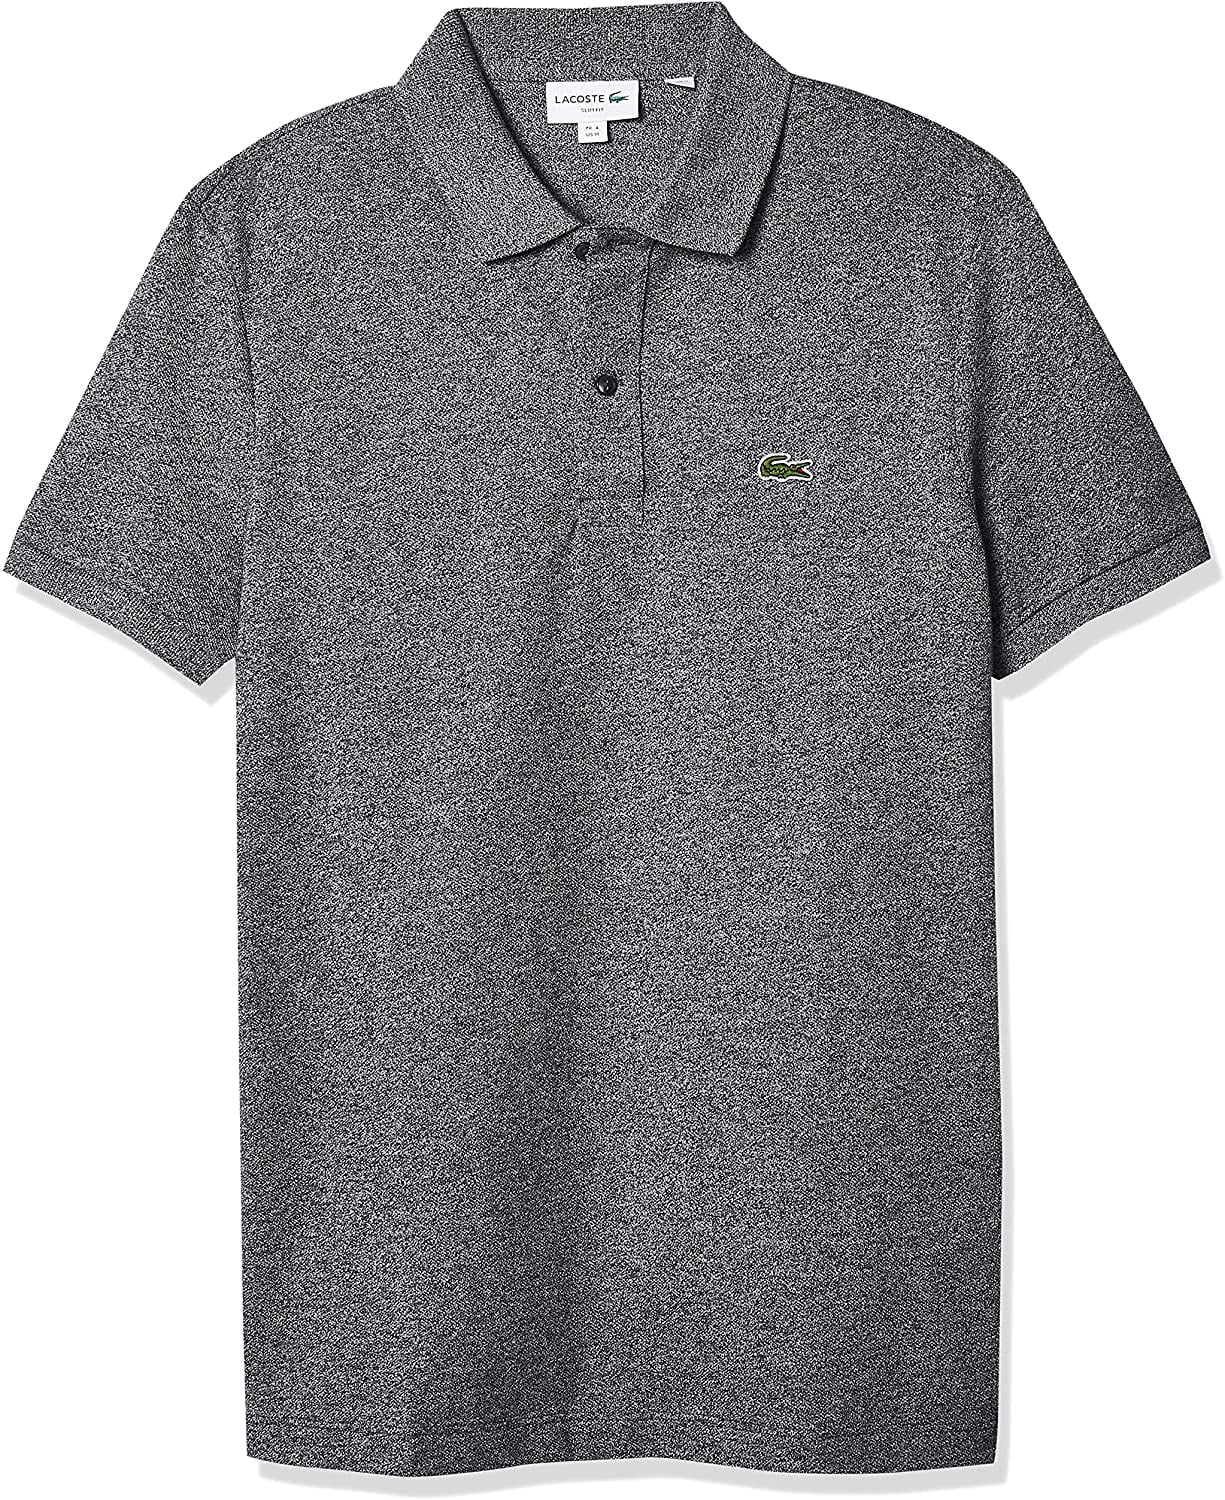 Lacoste Classic Pique Fit Short Sleeve Polo Shirt Eclipse Jasper - Walmart.com